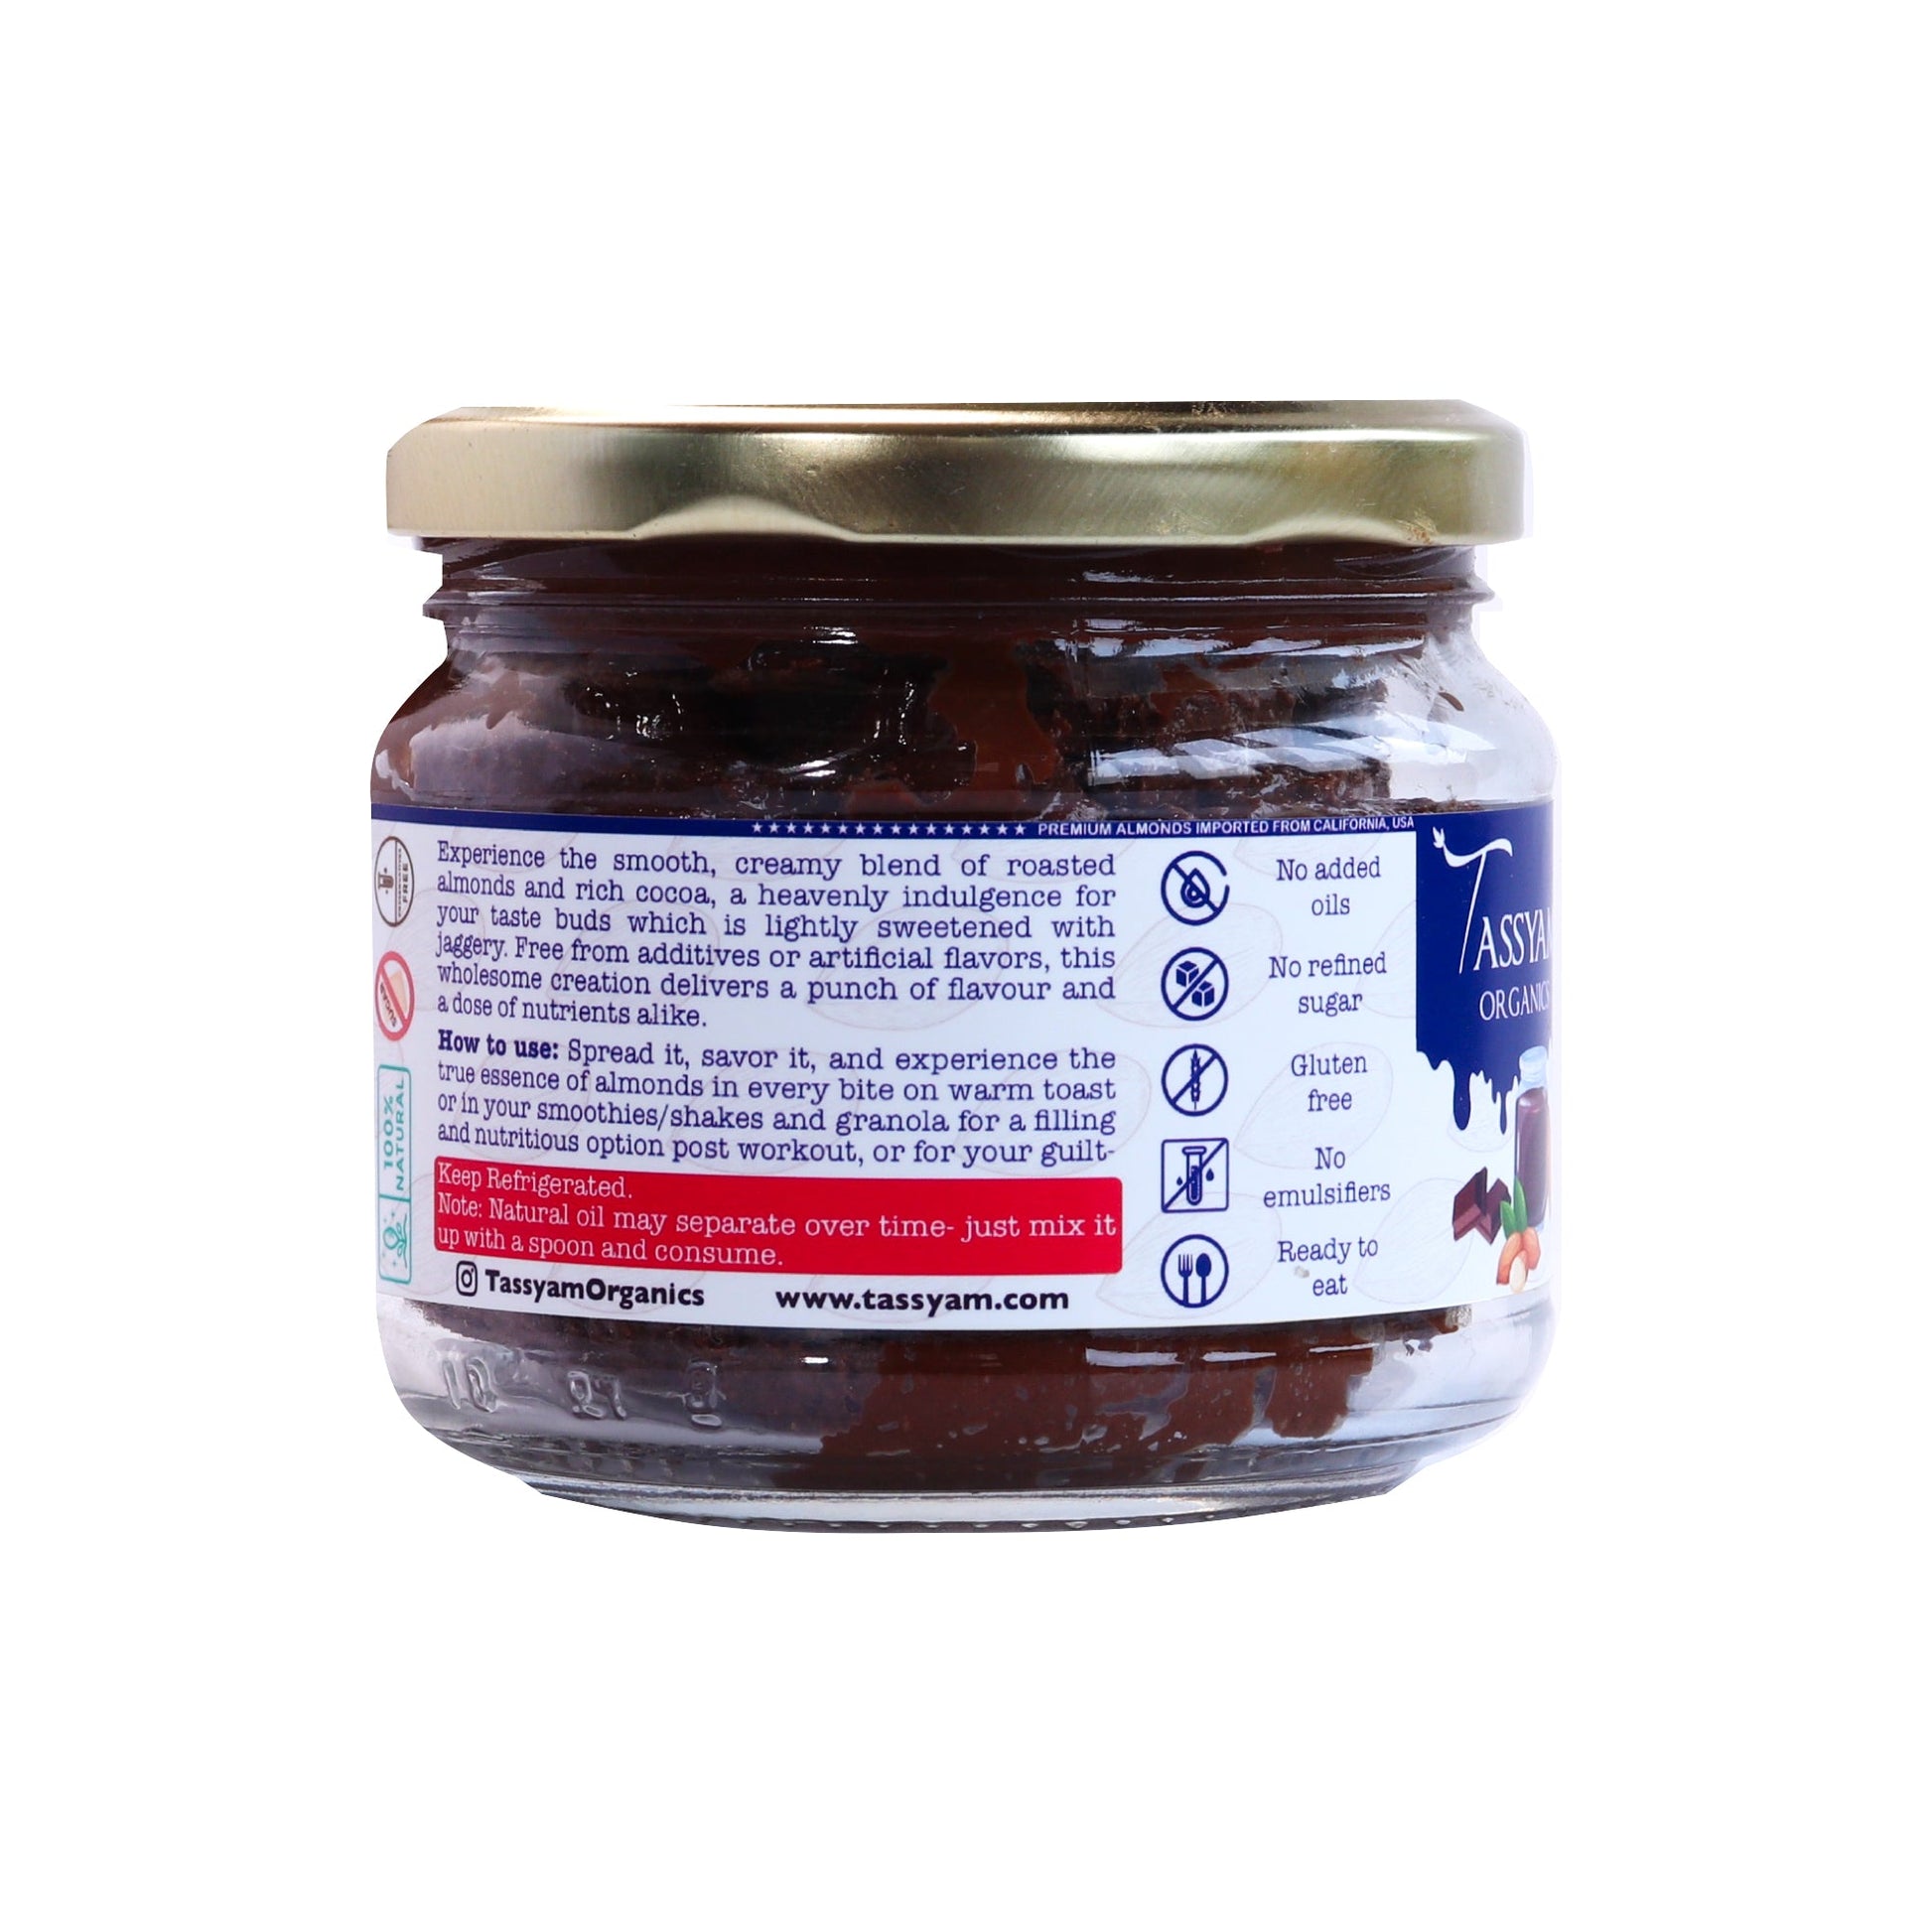 Rich Dark Chocolate Almond Spread, 300g - Tassyam Organics